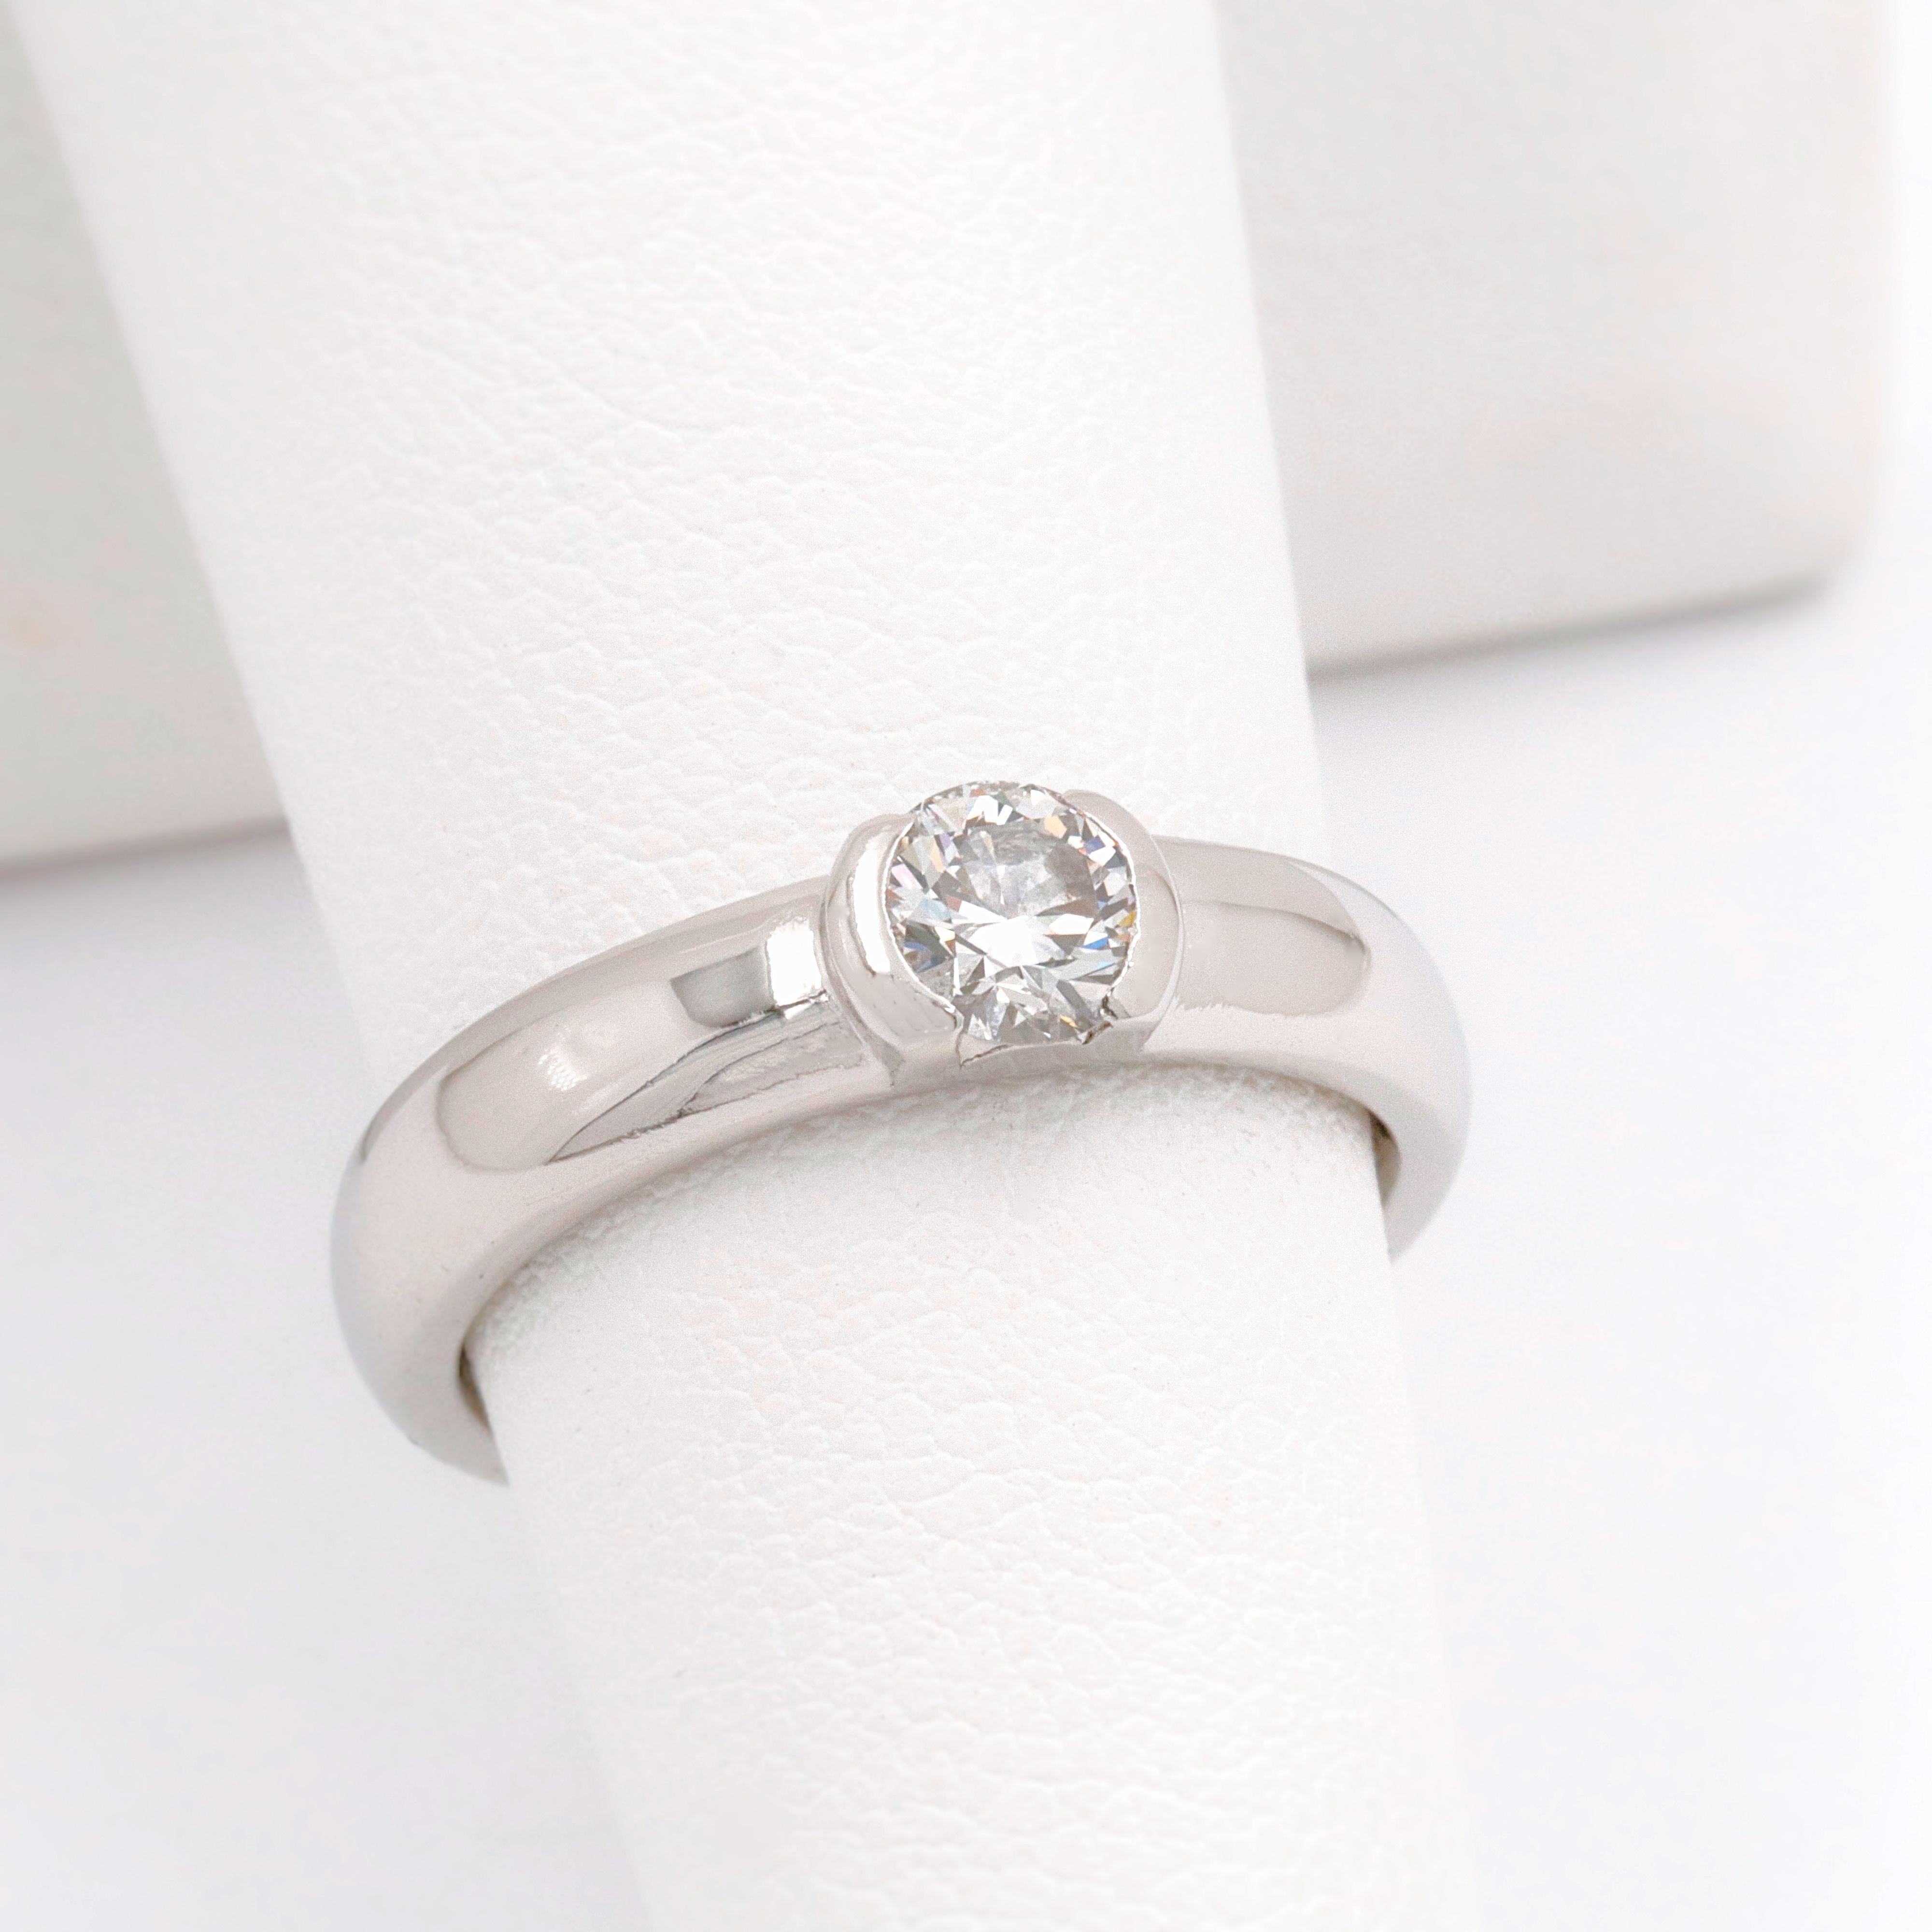 Tiffany & Co. Etoile Round Diamond 0.39 Carat Engagement Ring in Platinum 5